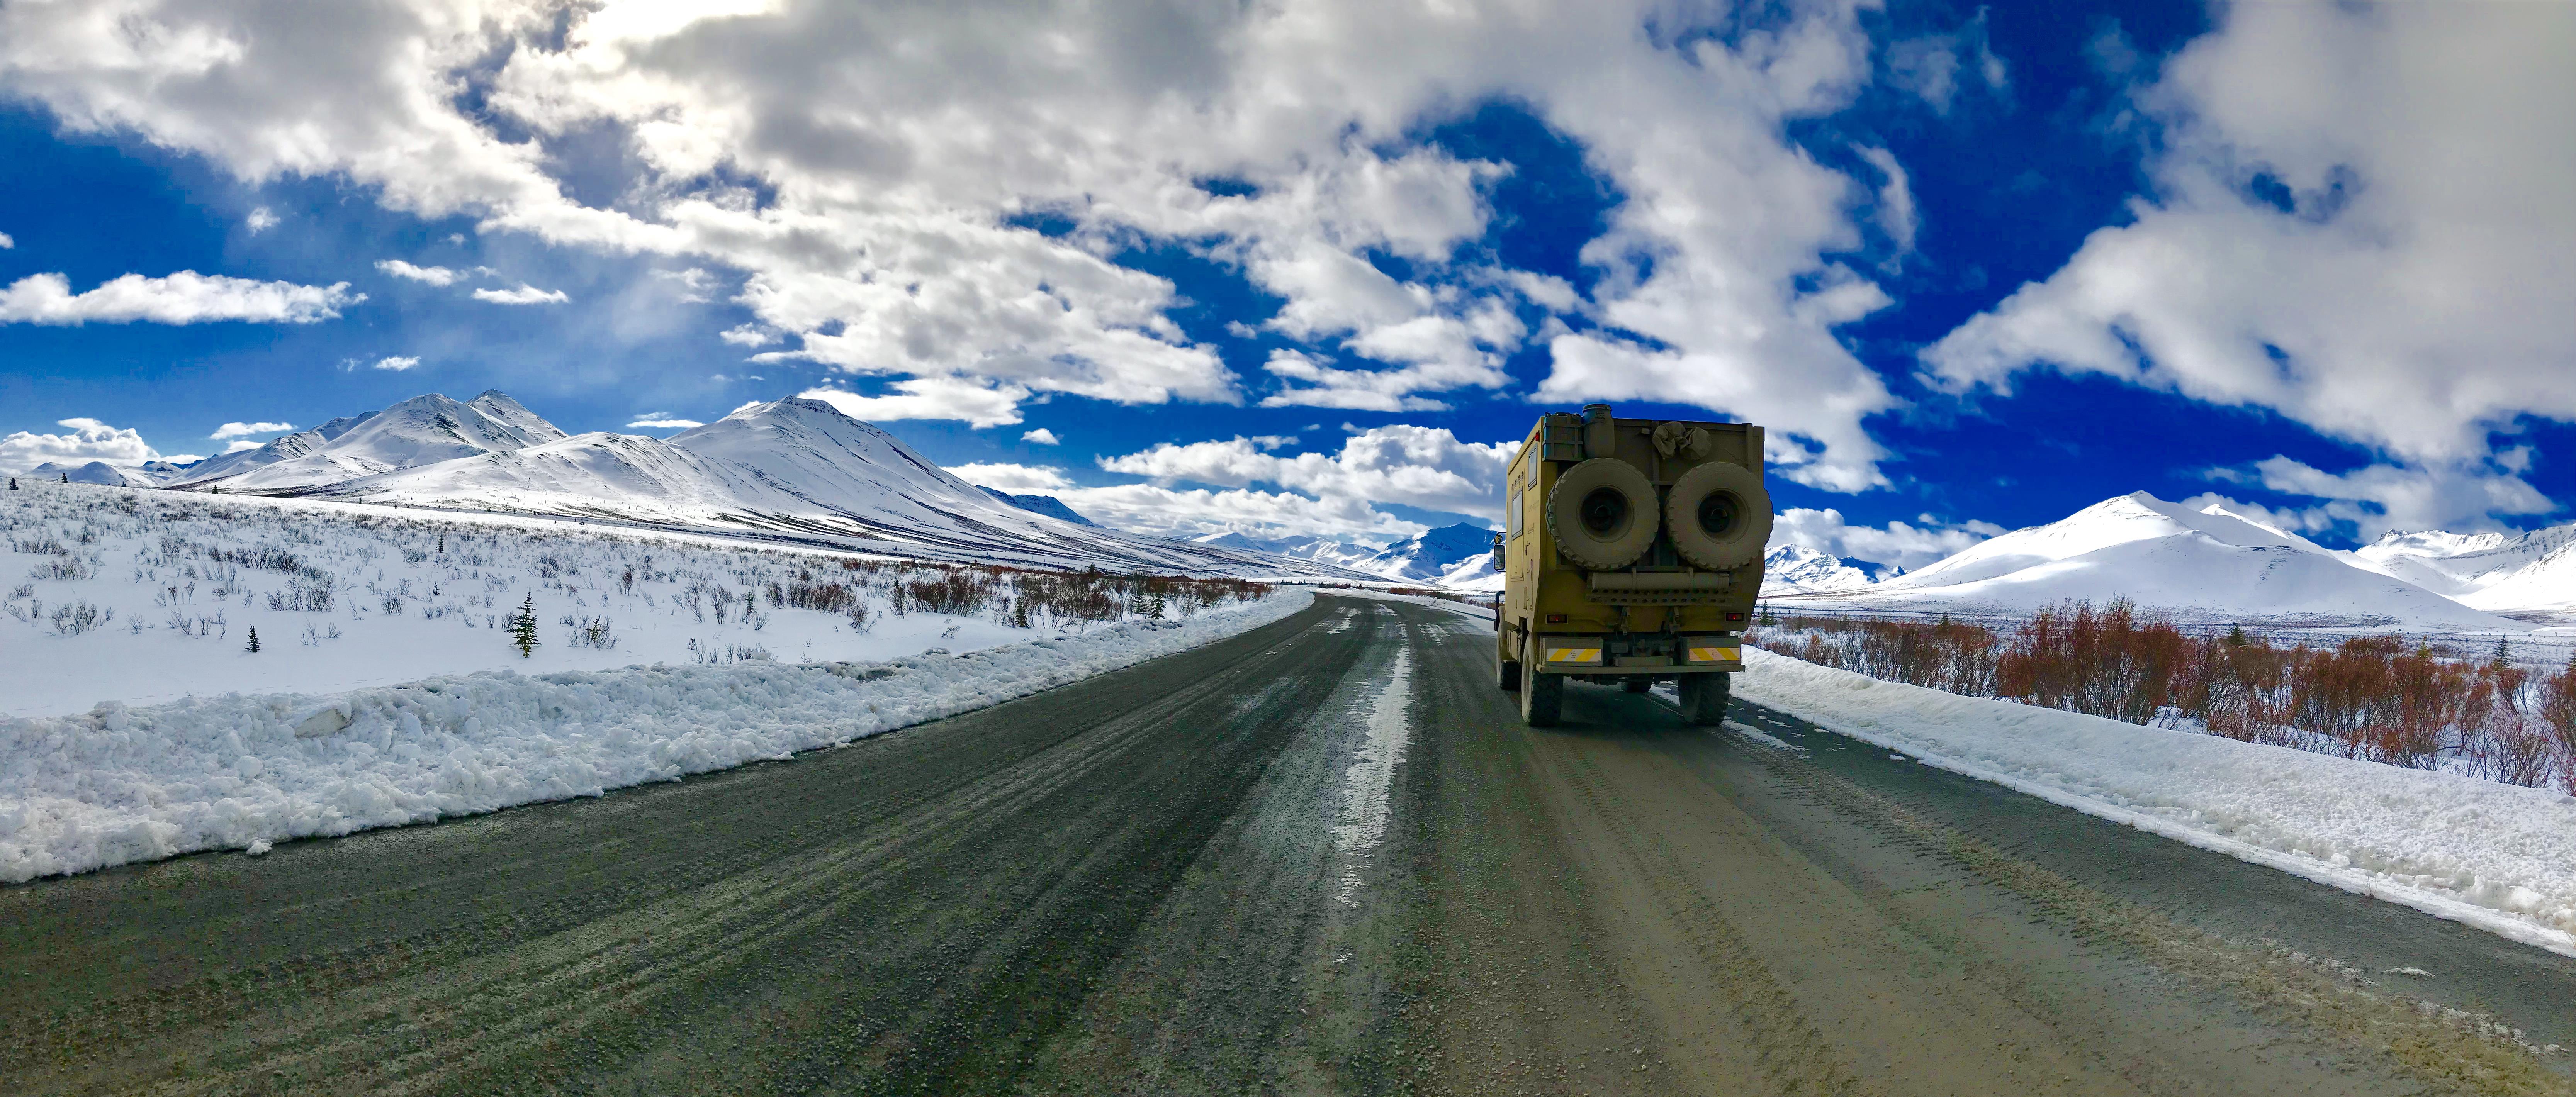 Unimob-Arktis-Roadtrip